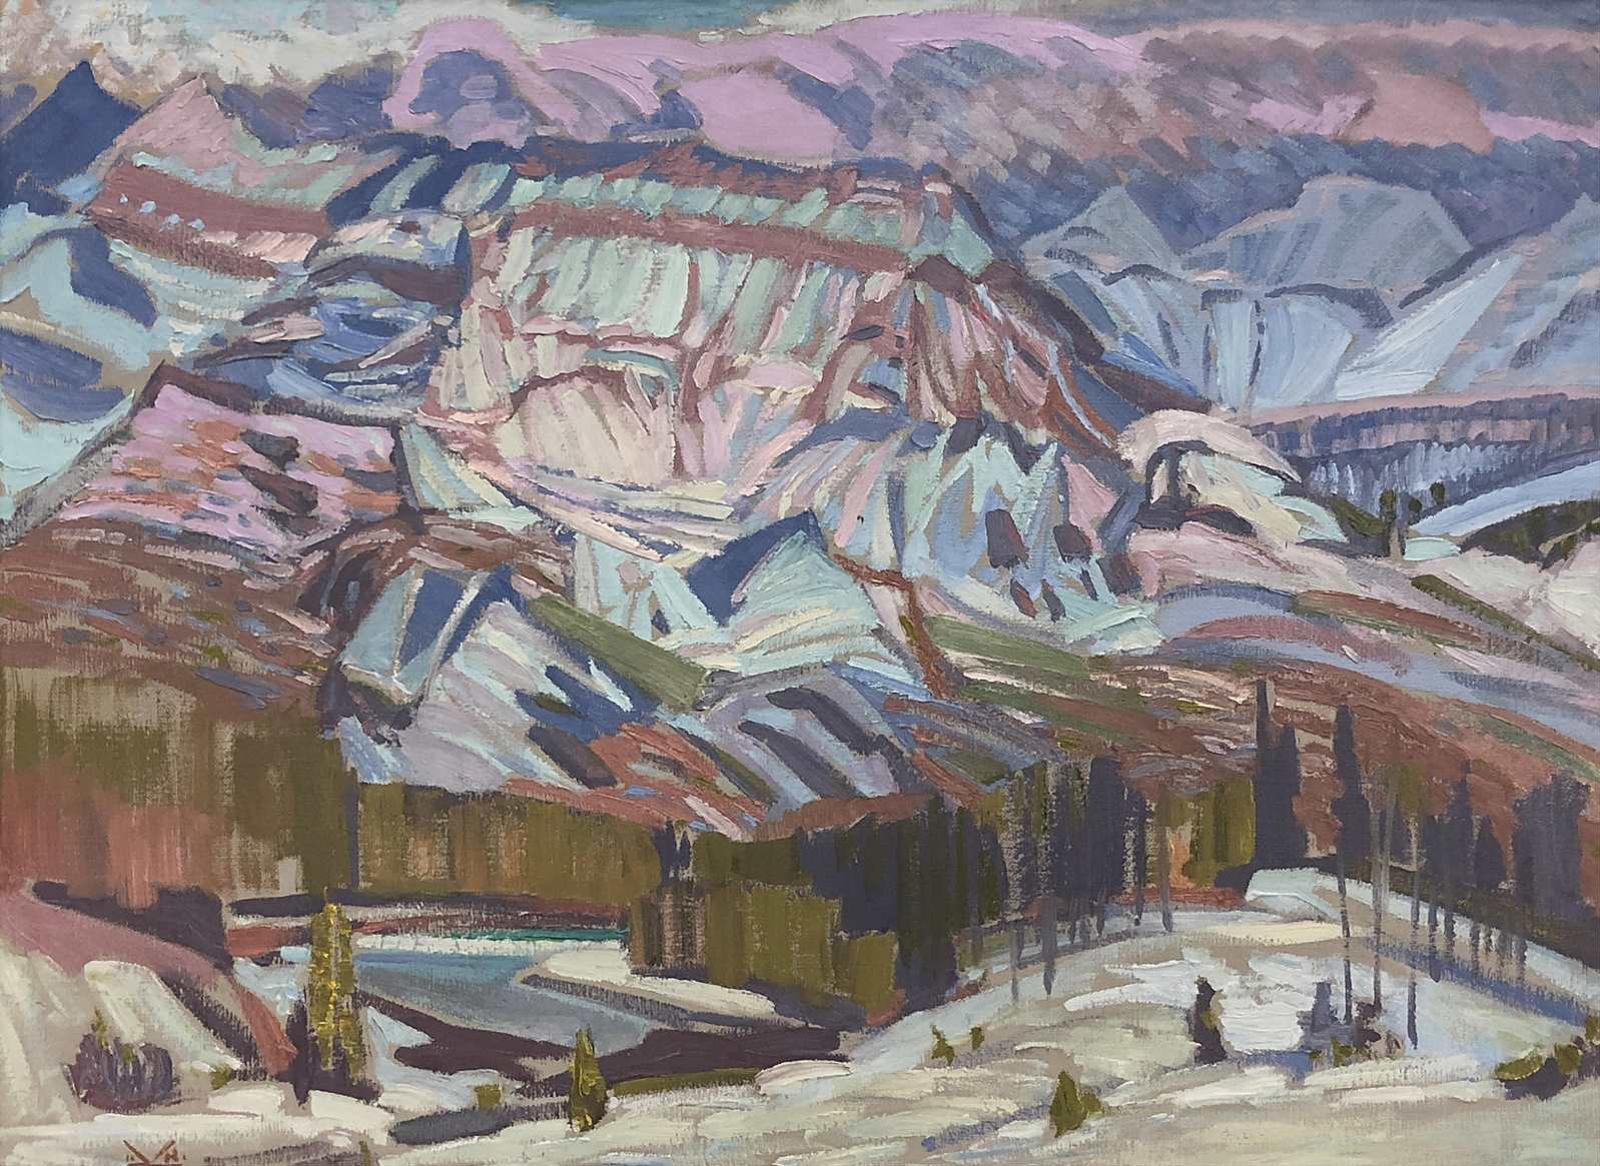 Illingworth Holey (Buck) Kerr (1905-1989) - Winter Mountainscape; 1966